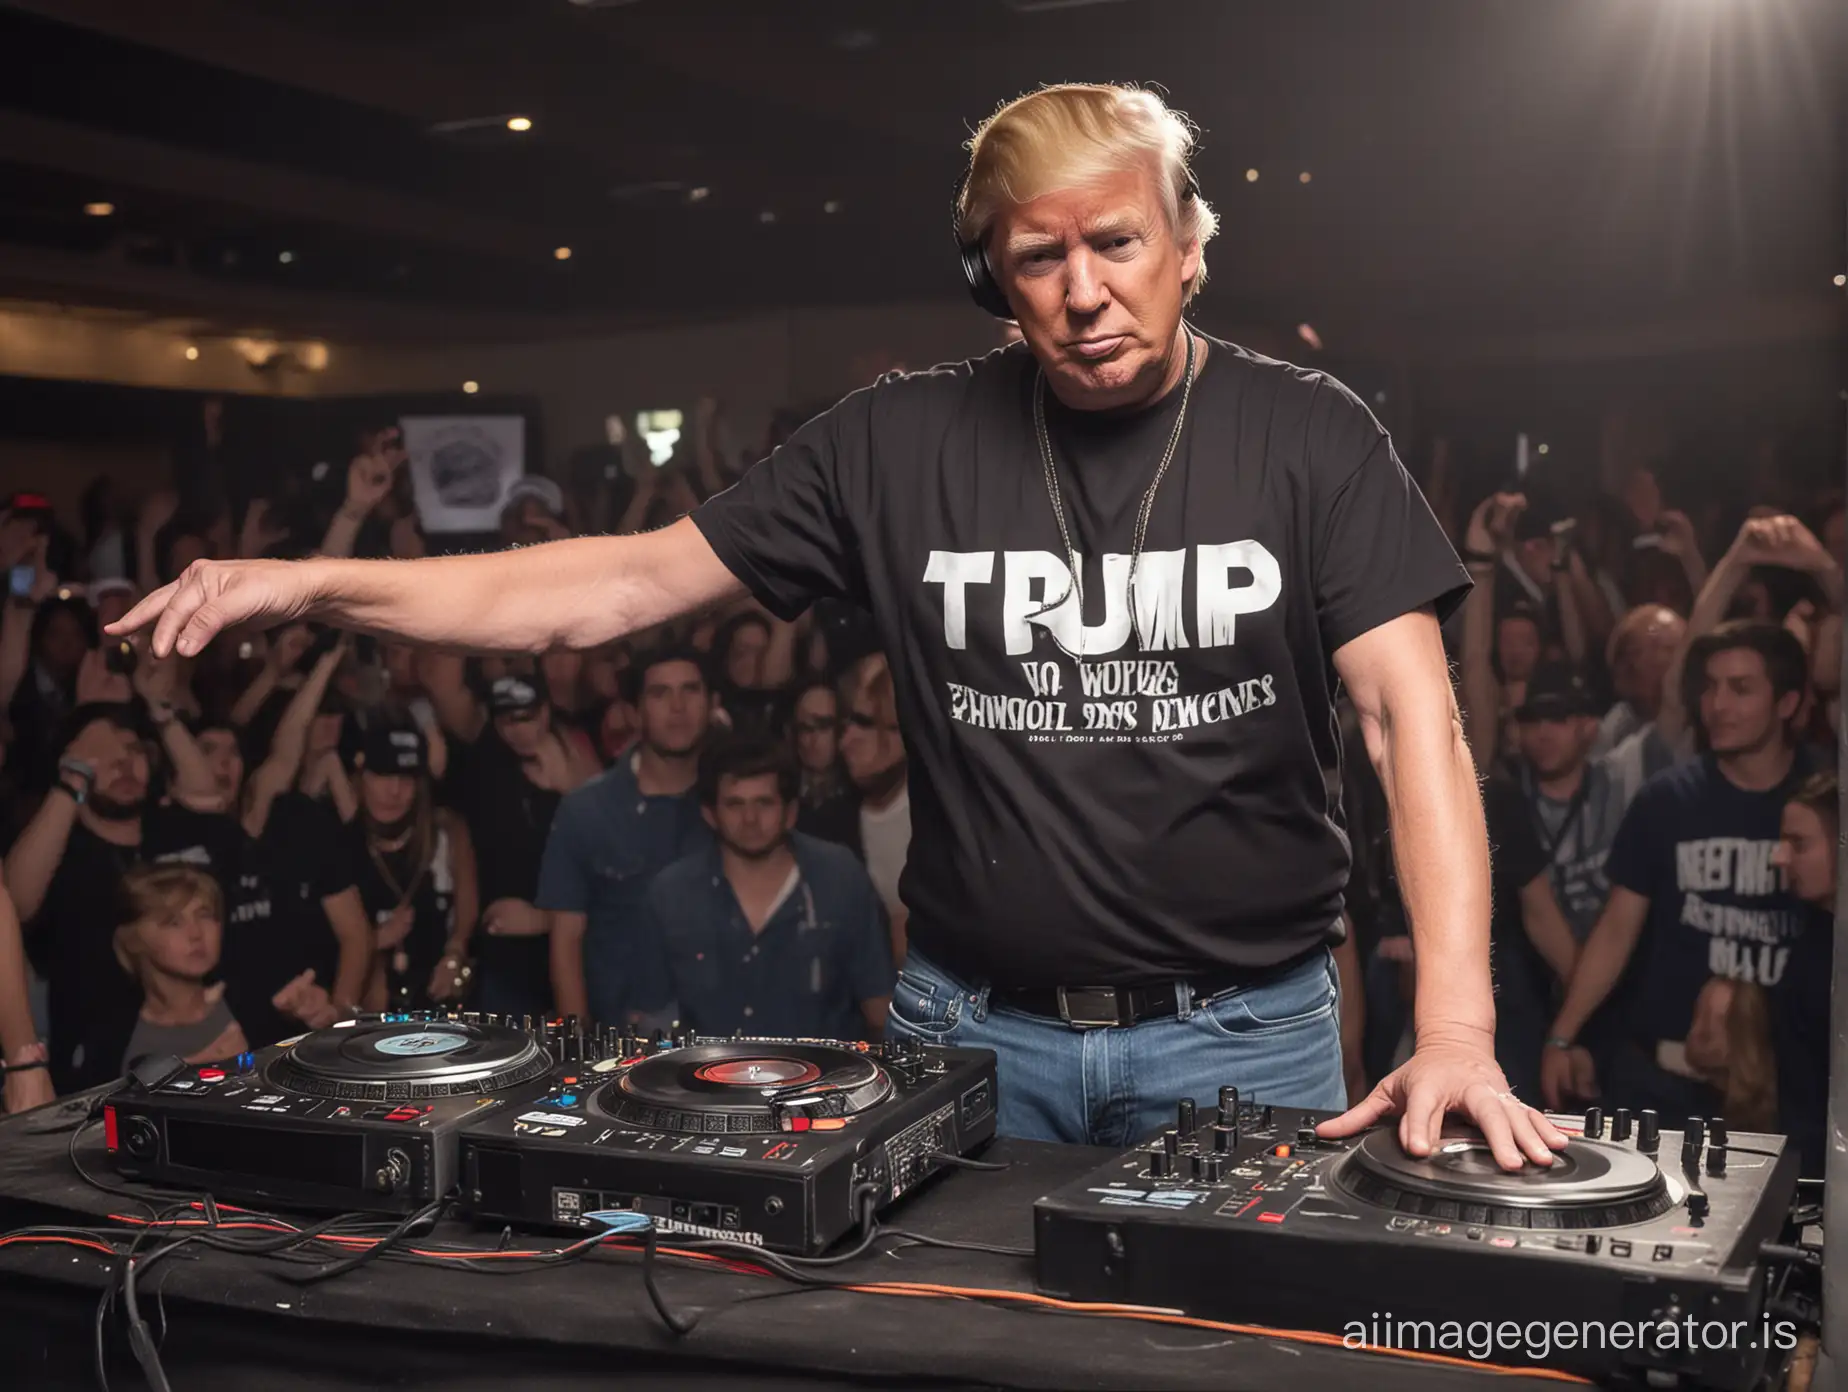 Donald-Trump-DJing-in-Club-with-Casual-Attire